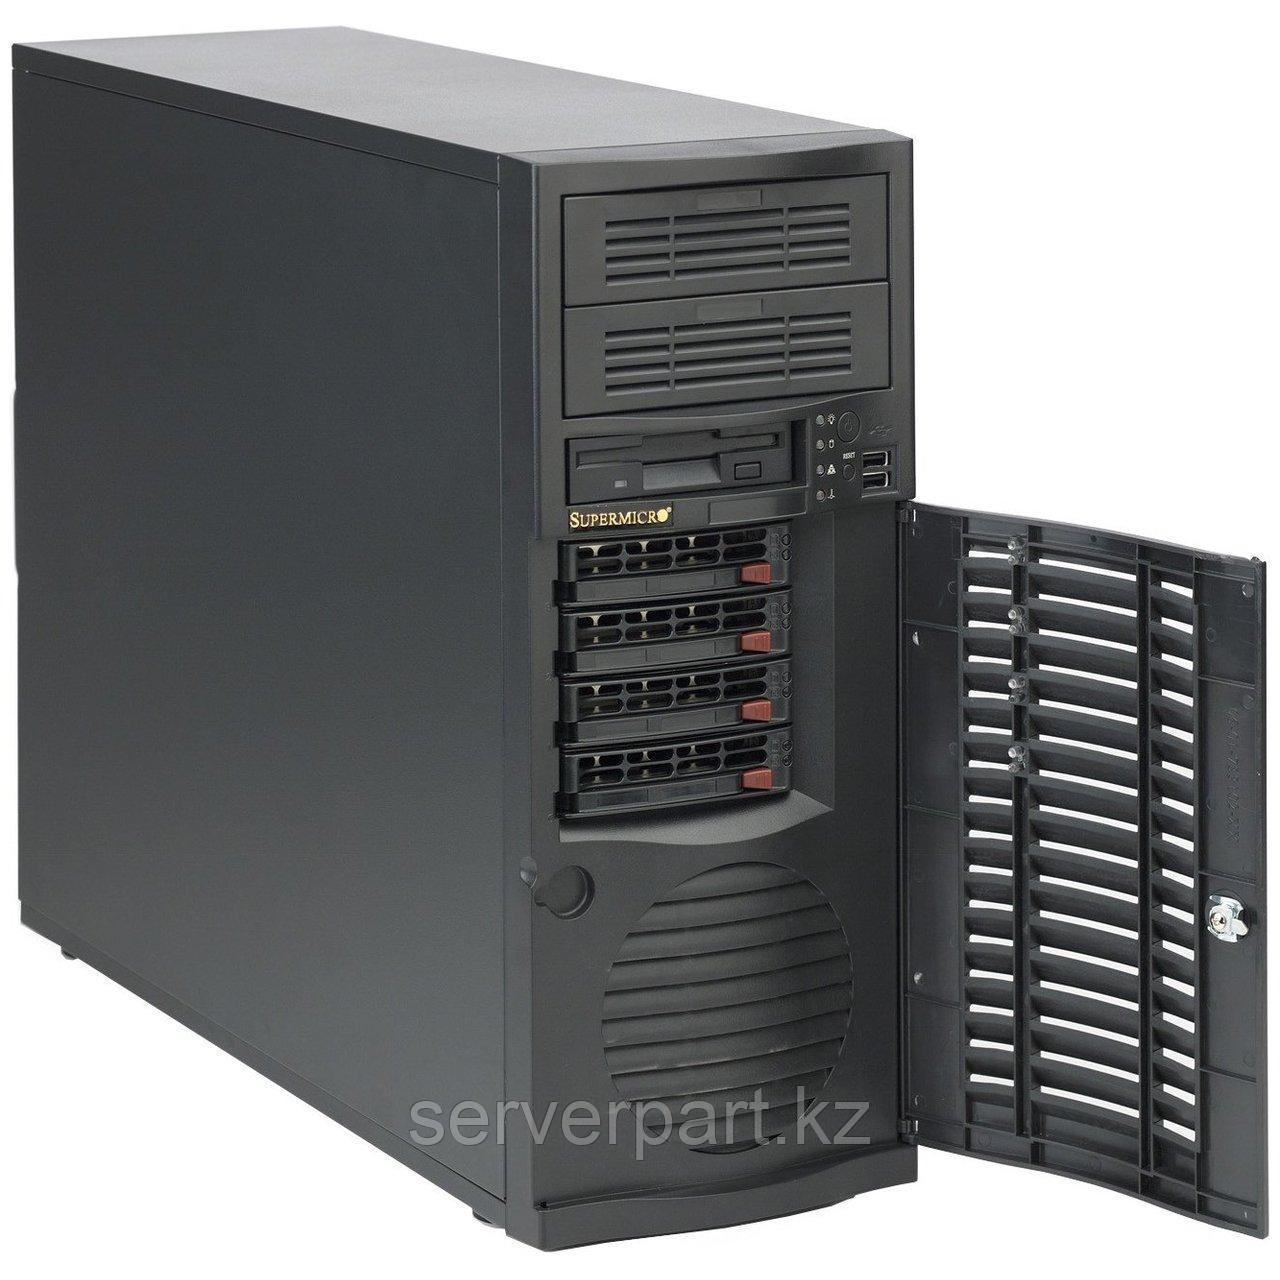 Сервер Supermicro 733T-500B\X10DRL-I Tower 4LFF/1х10-core Intel Xeon E5-2650v3 2.3GHz/no RAM/no HDD